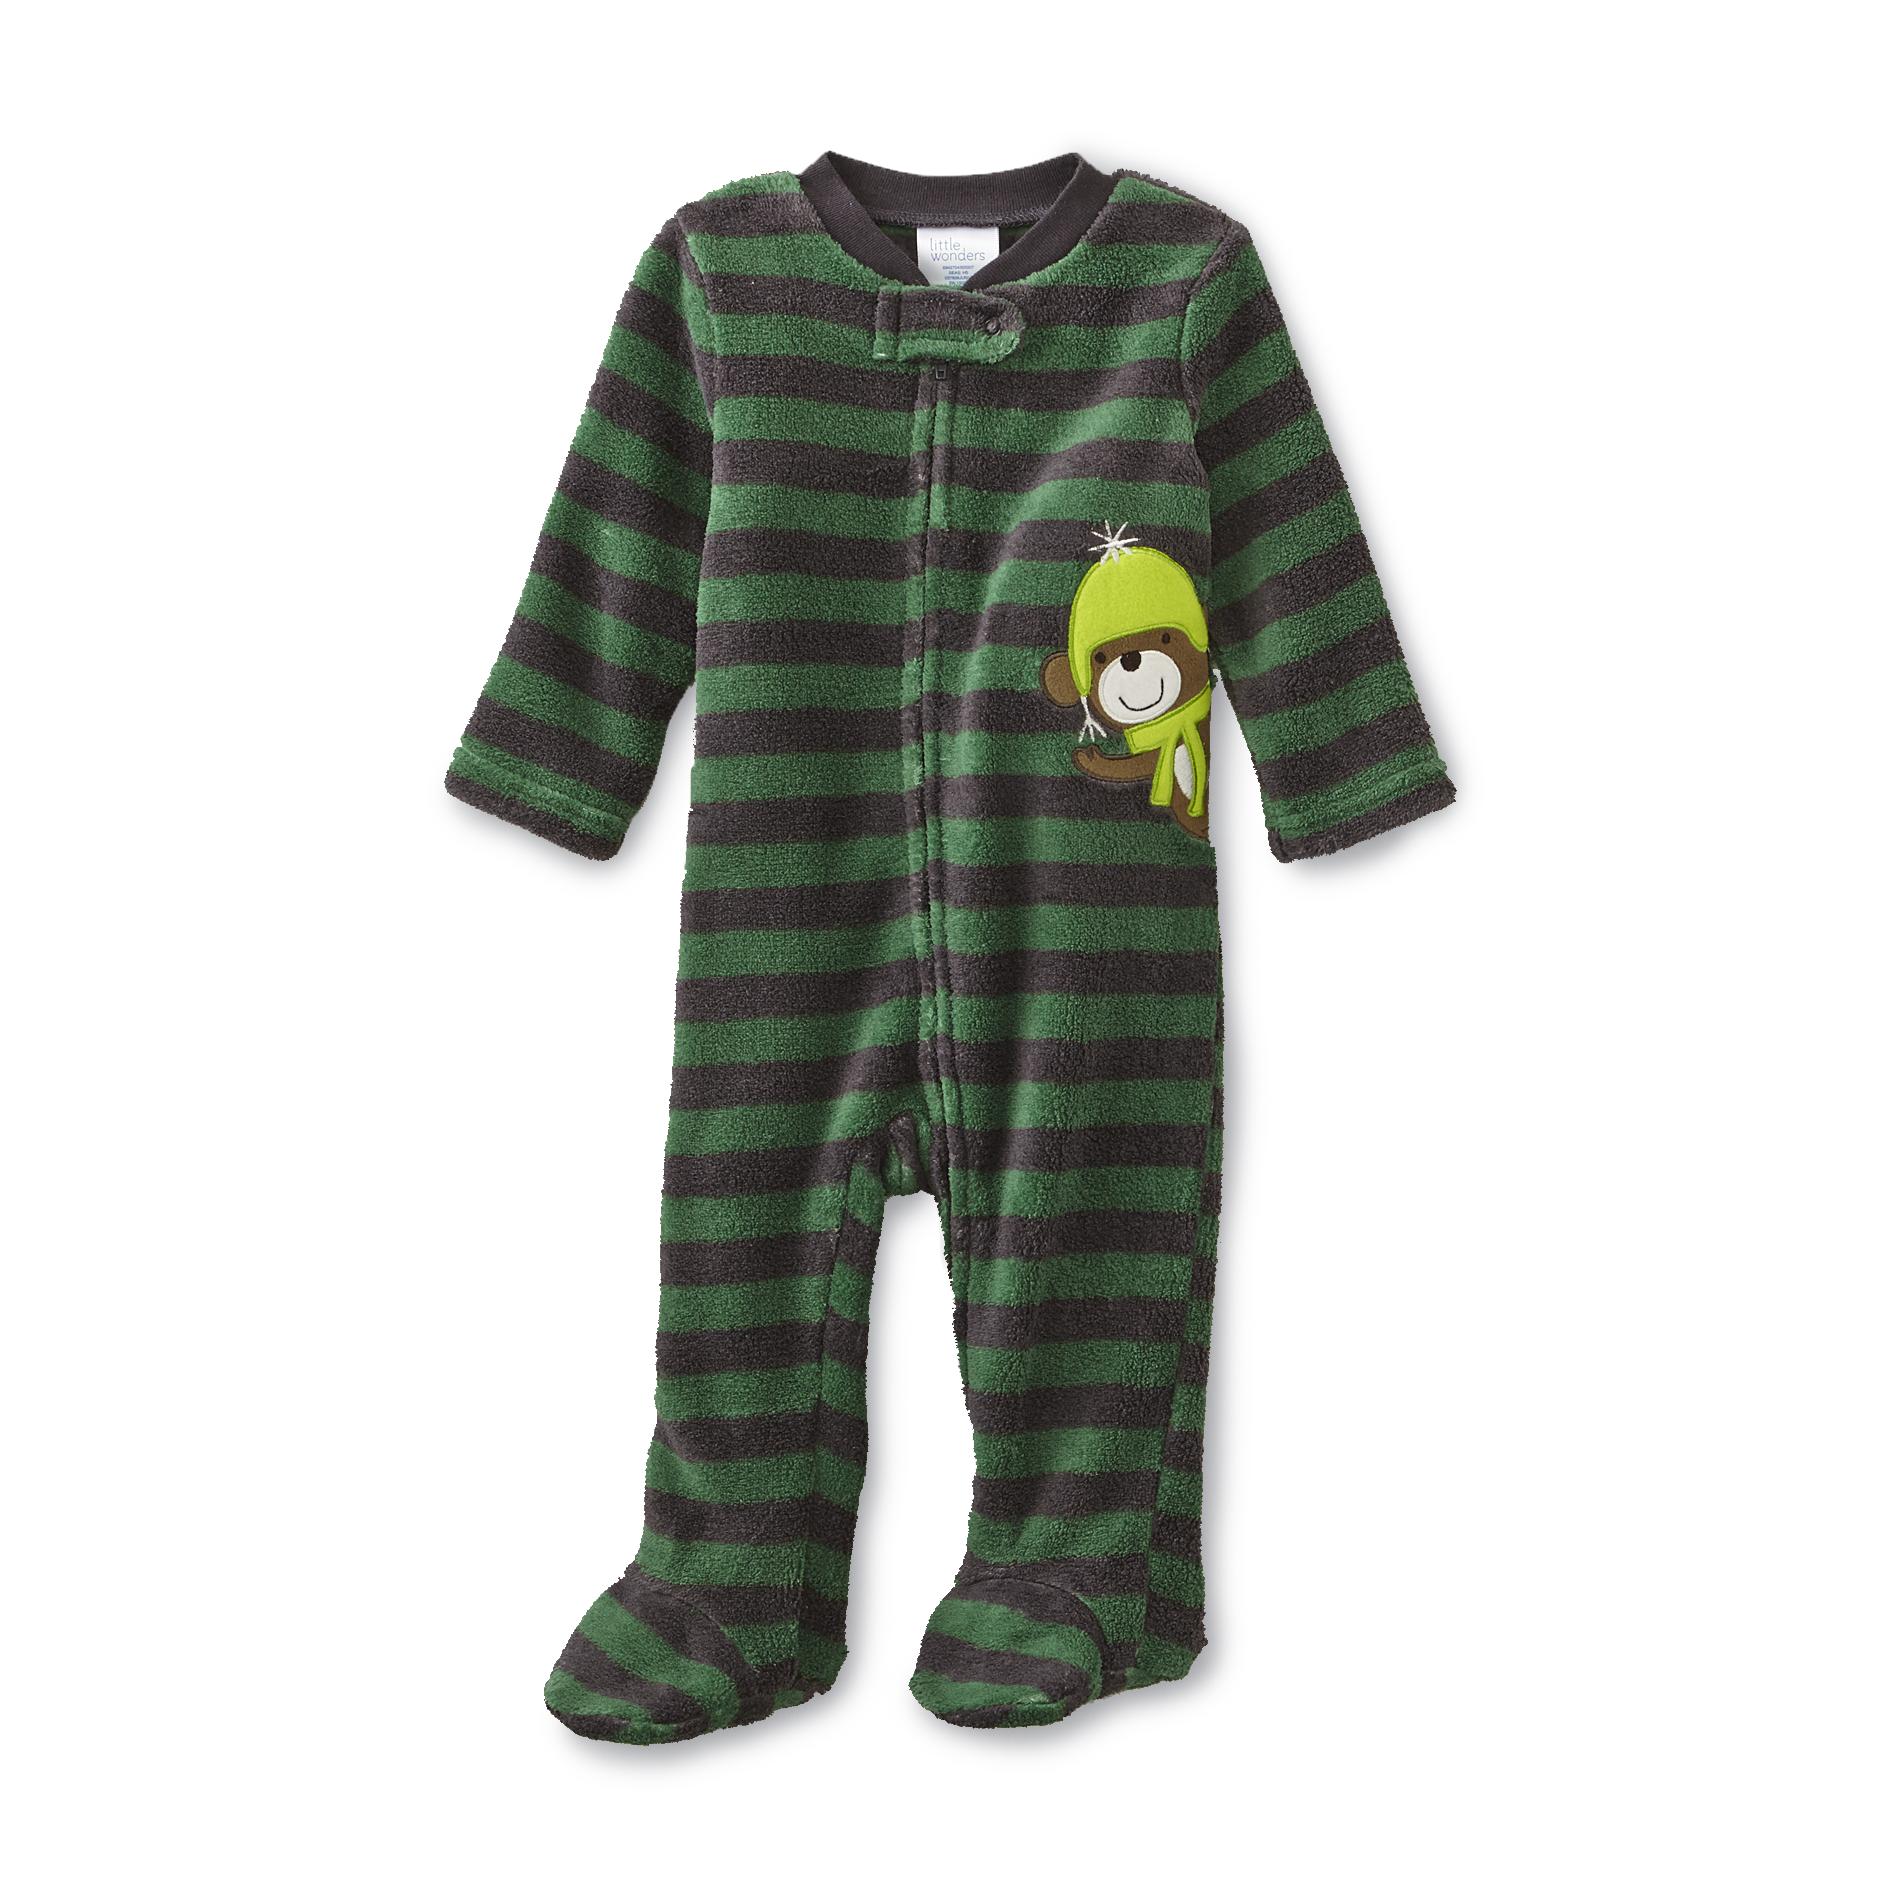 Little Wonders Newborn Boy's Footed Pajamas - Striped